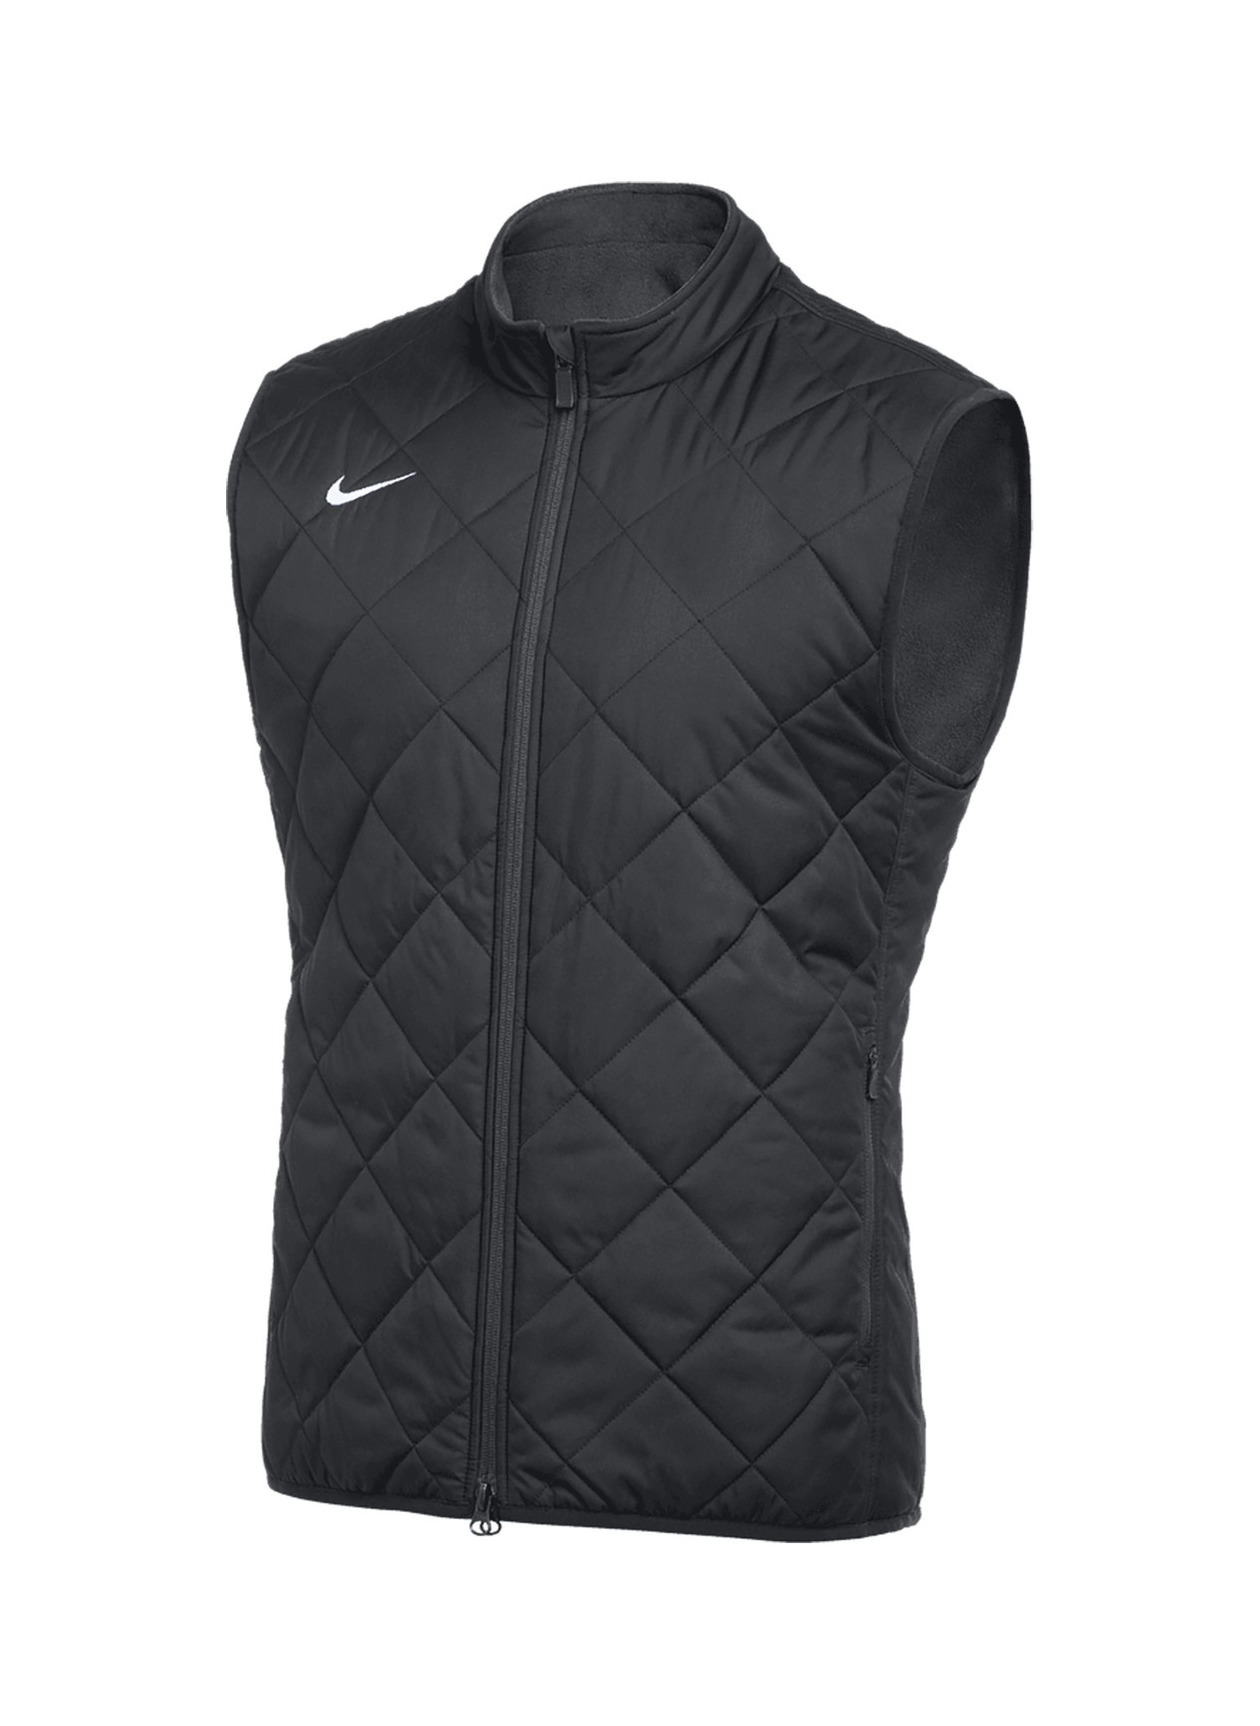 Embroidered Nike Men's Team Anthracite-Team Black Football Vest ...